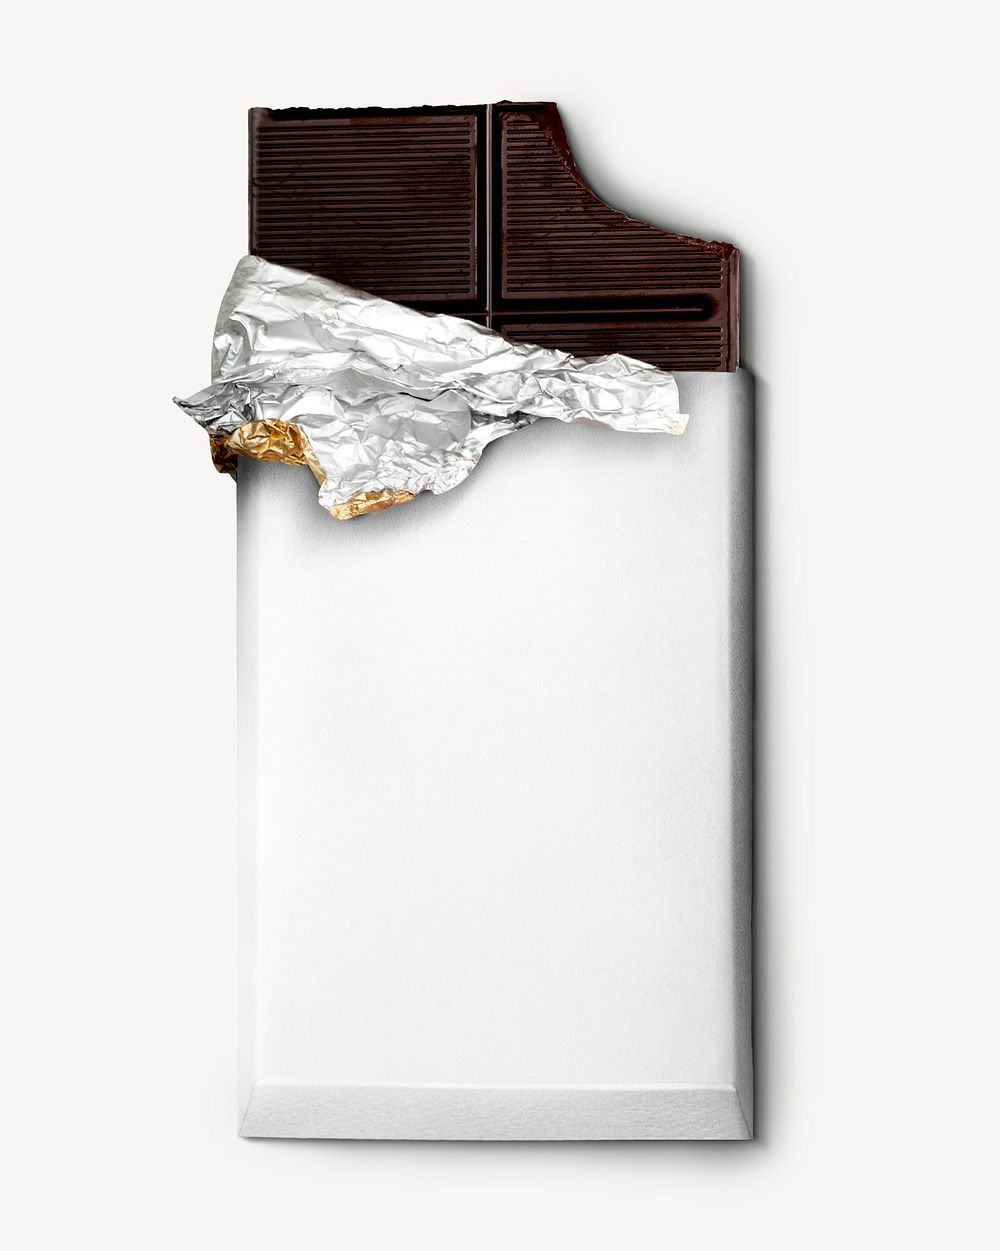 Chocolate packaging mockup psd